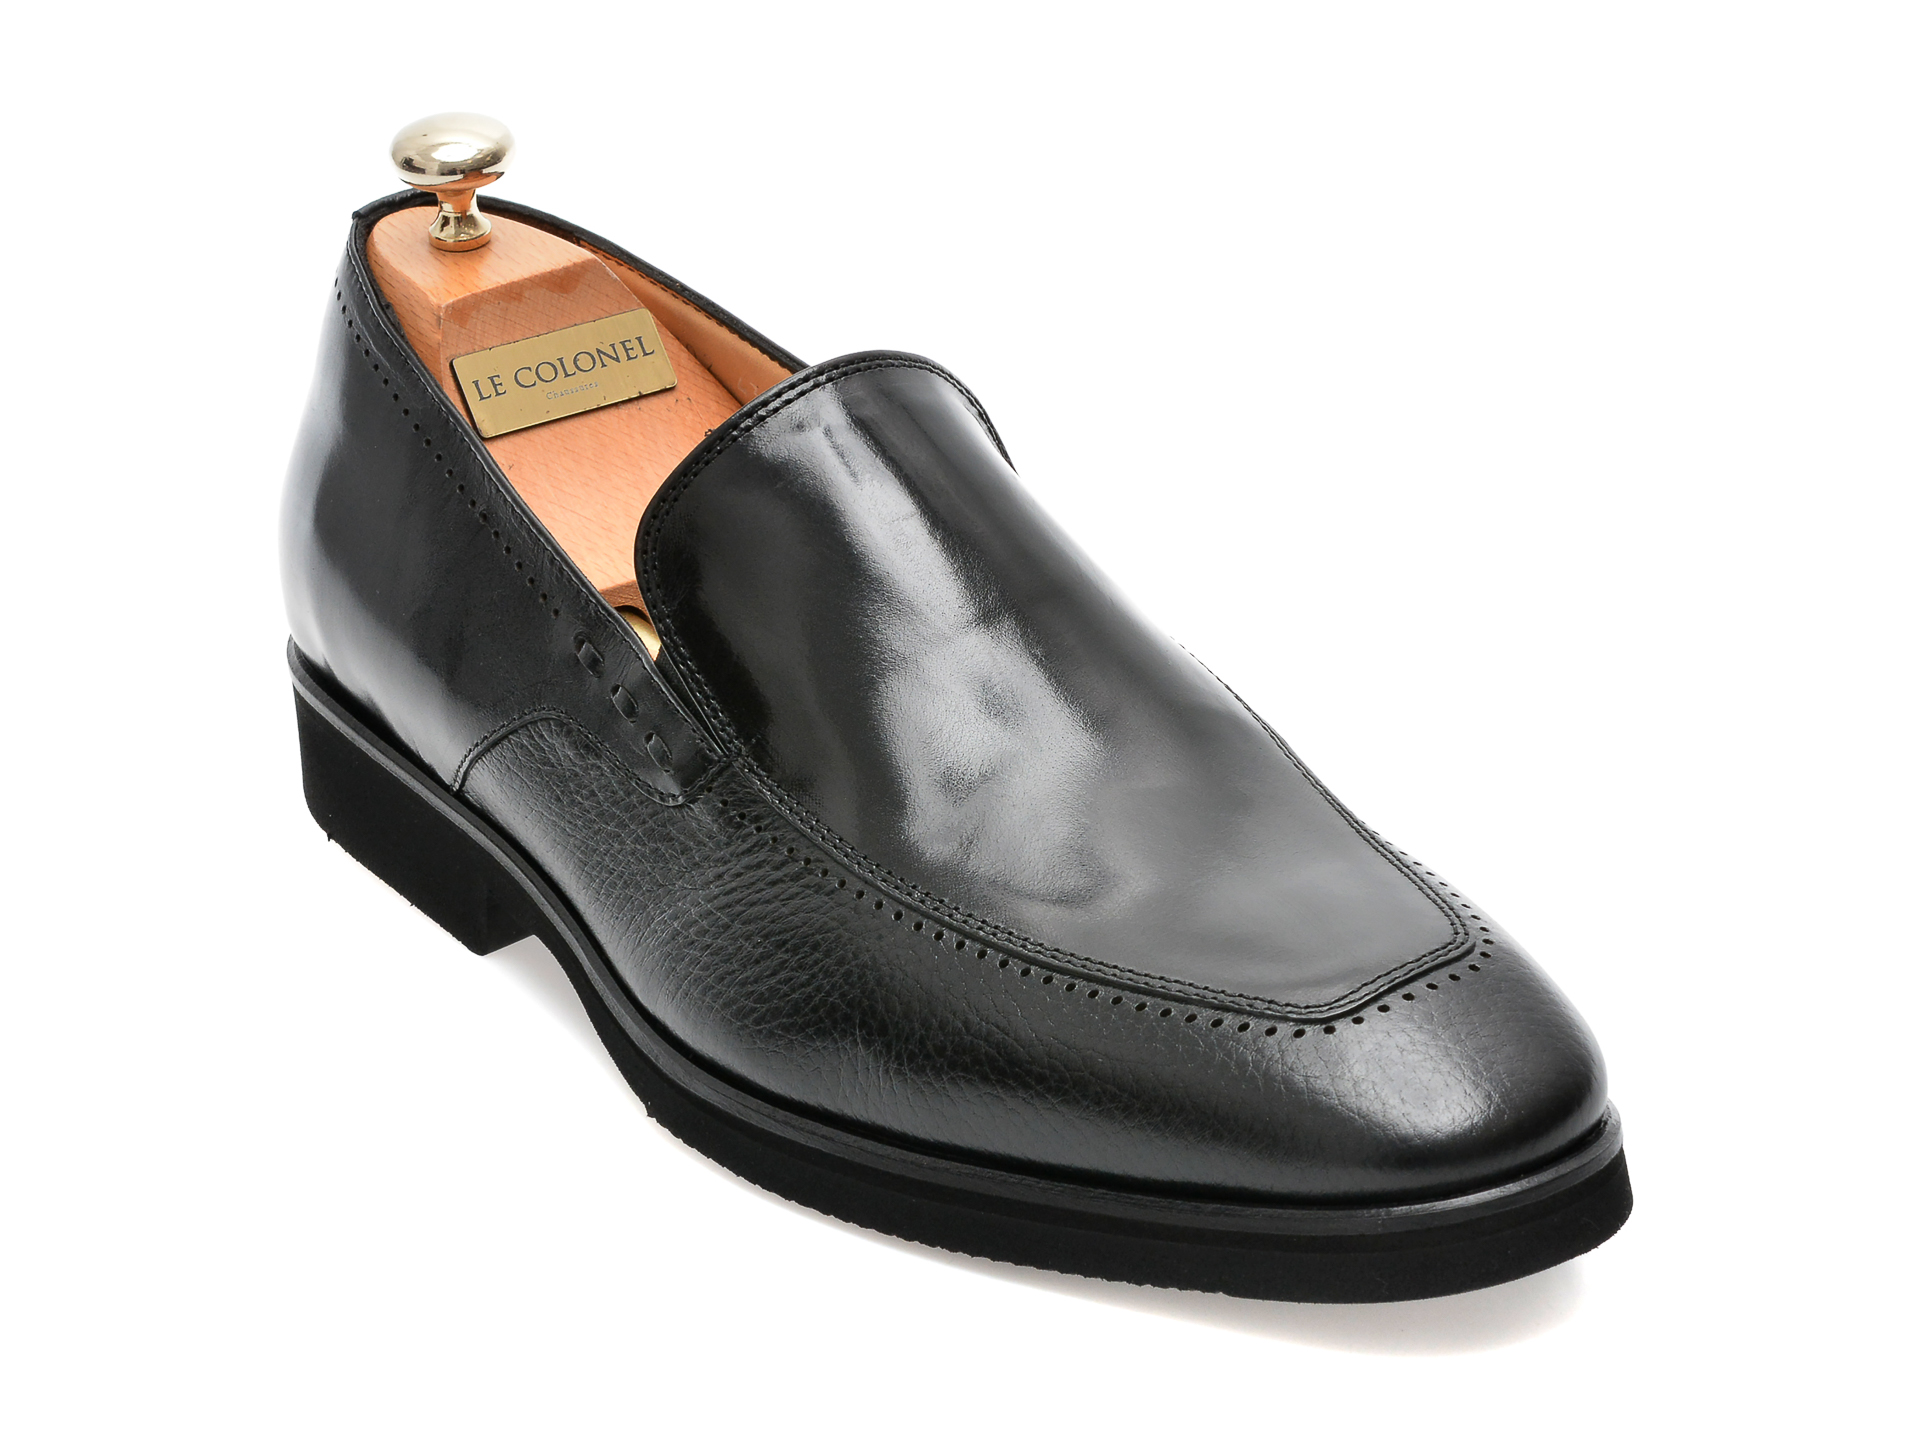 Pantofi LE COLONEL negri, 48702, din piele naturala /barbati/pantofi